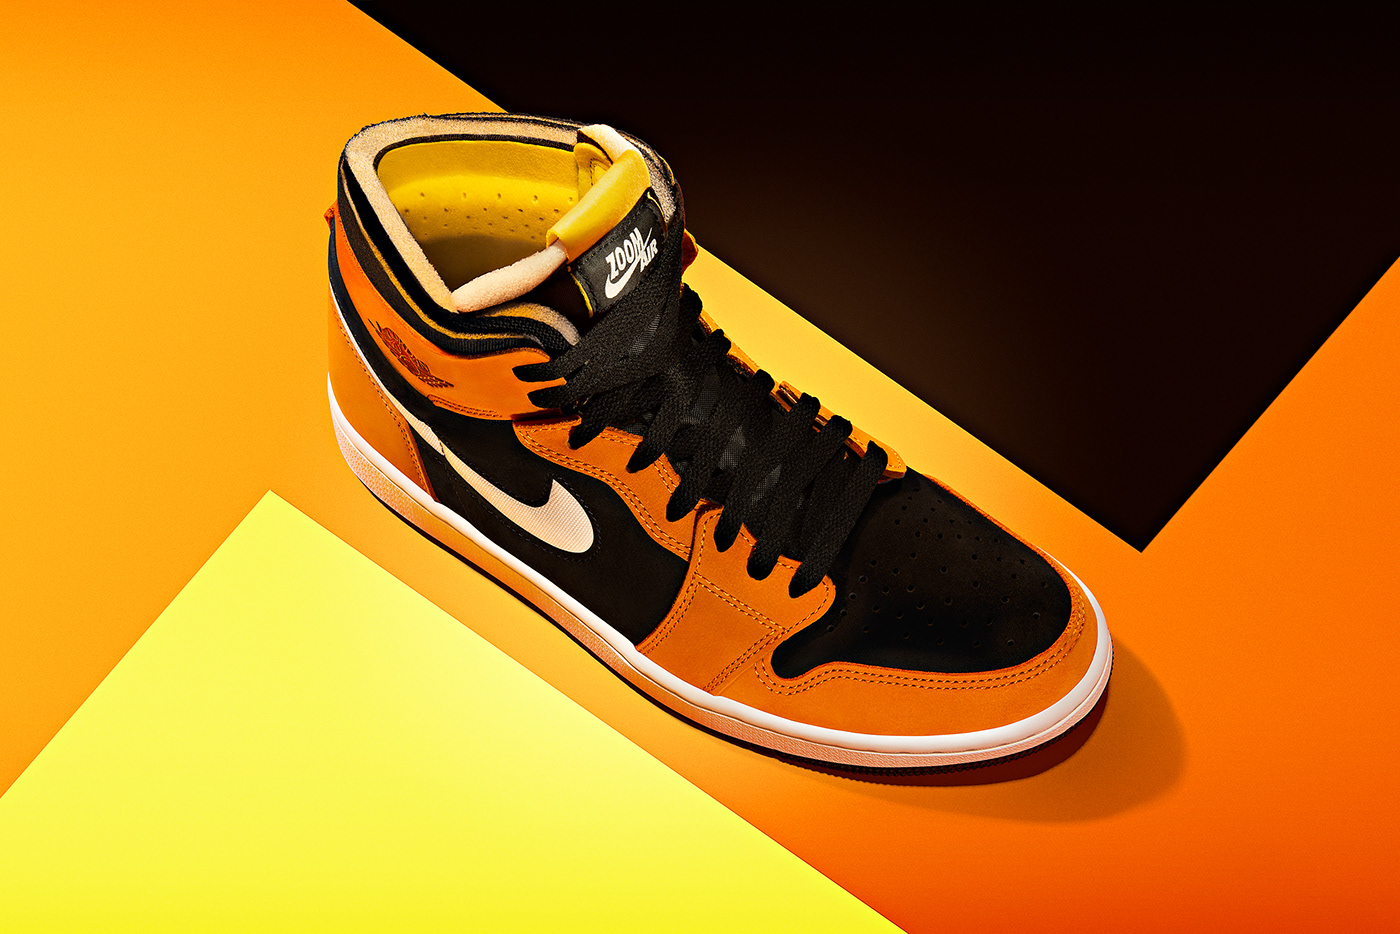 Nike Nike Shoes air jordan sneakers streetwear apparel sports basketball